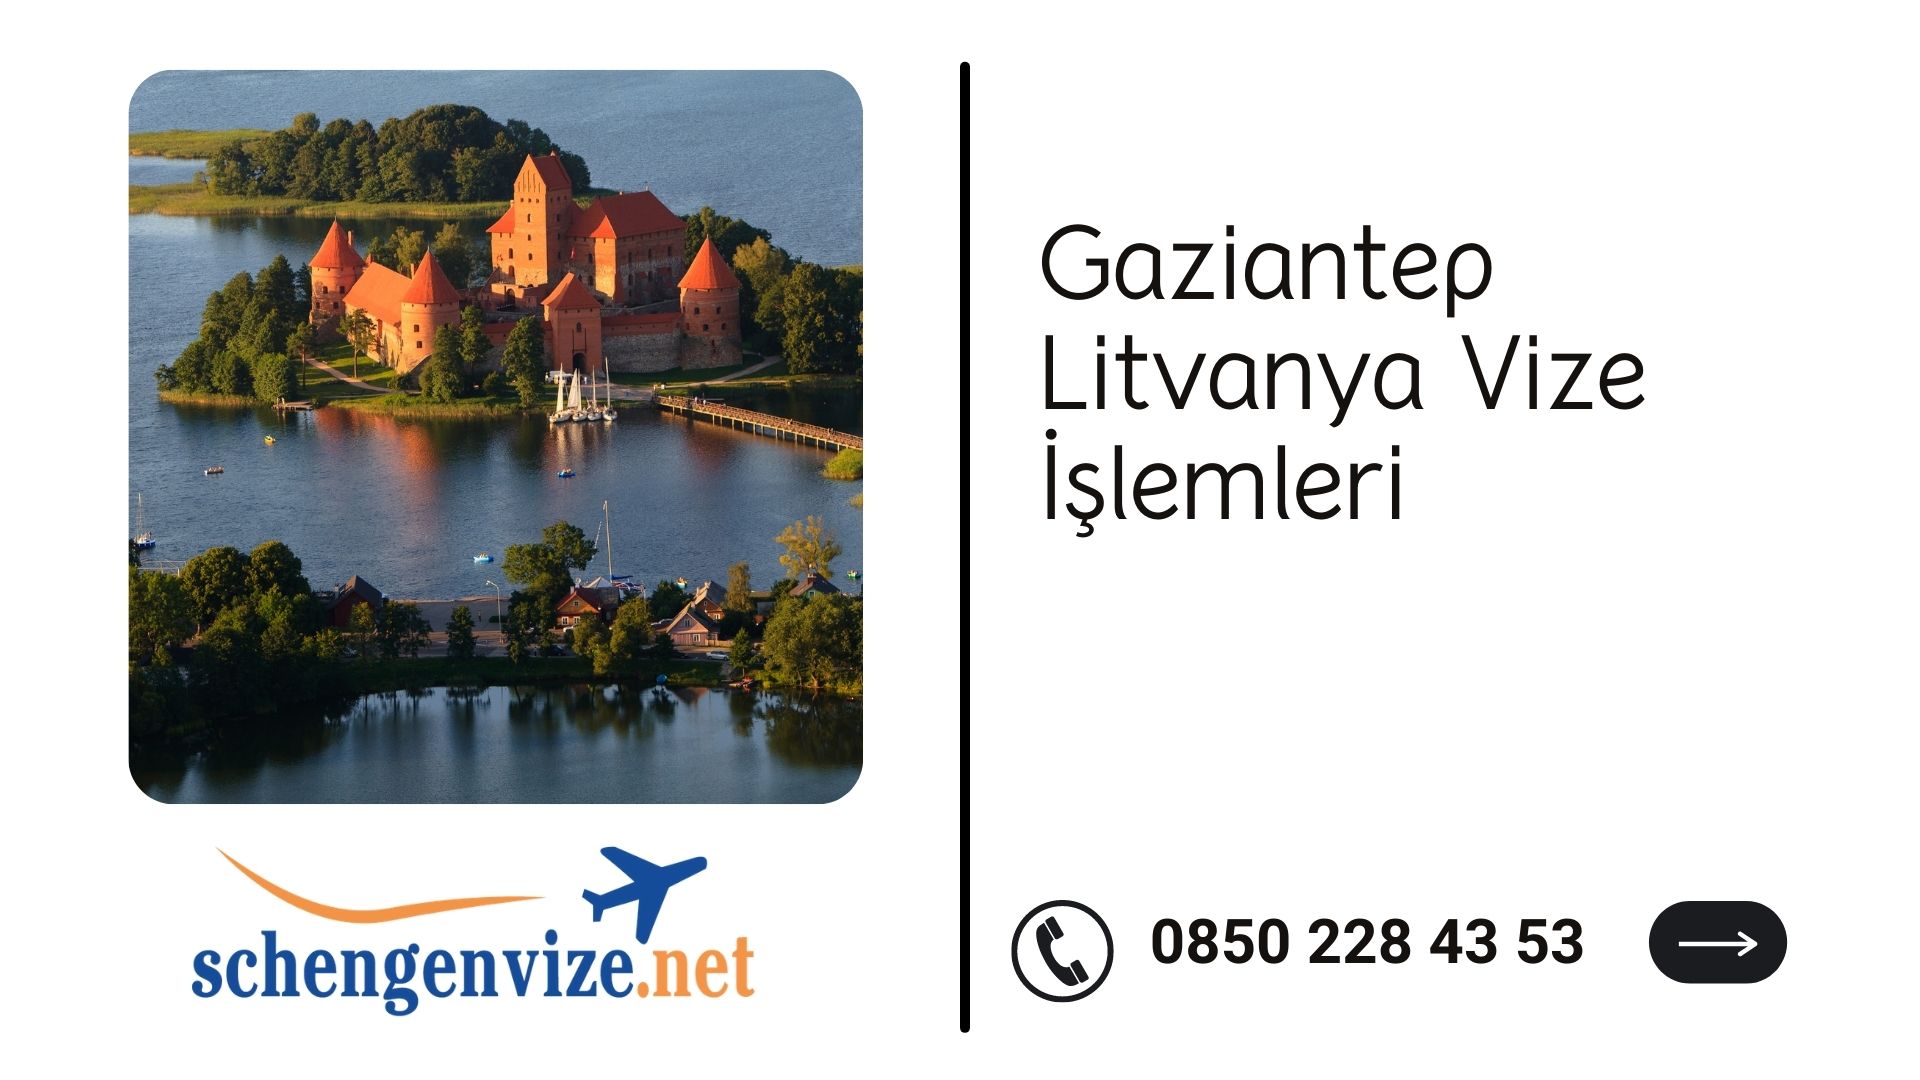 Gaziantep Litvanya Vize İşlemleri